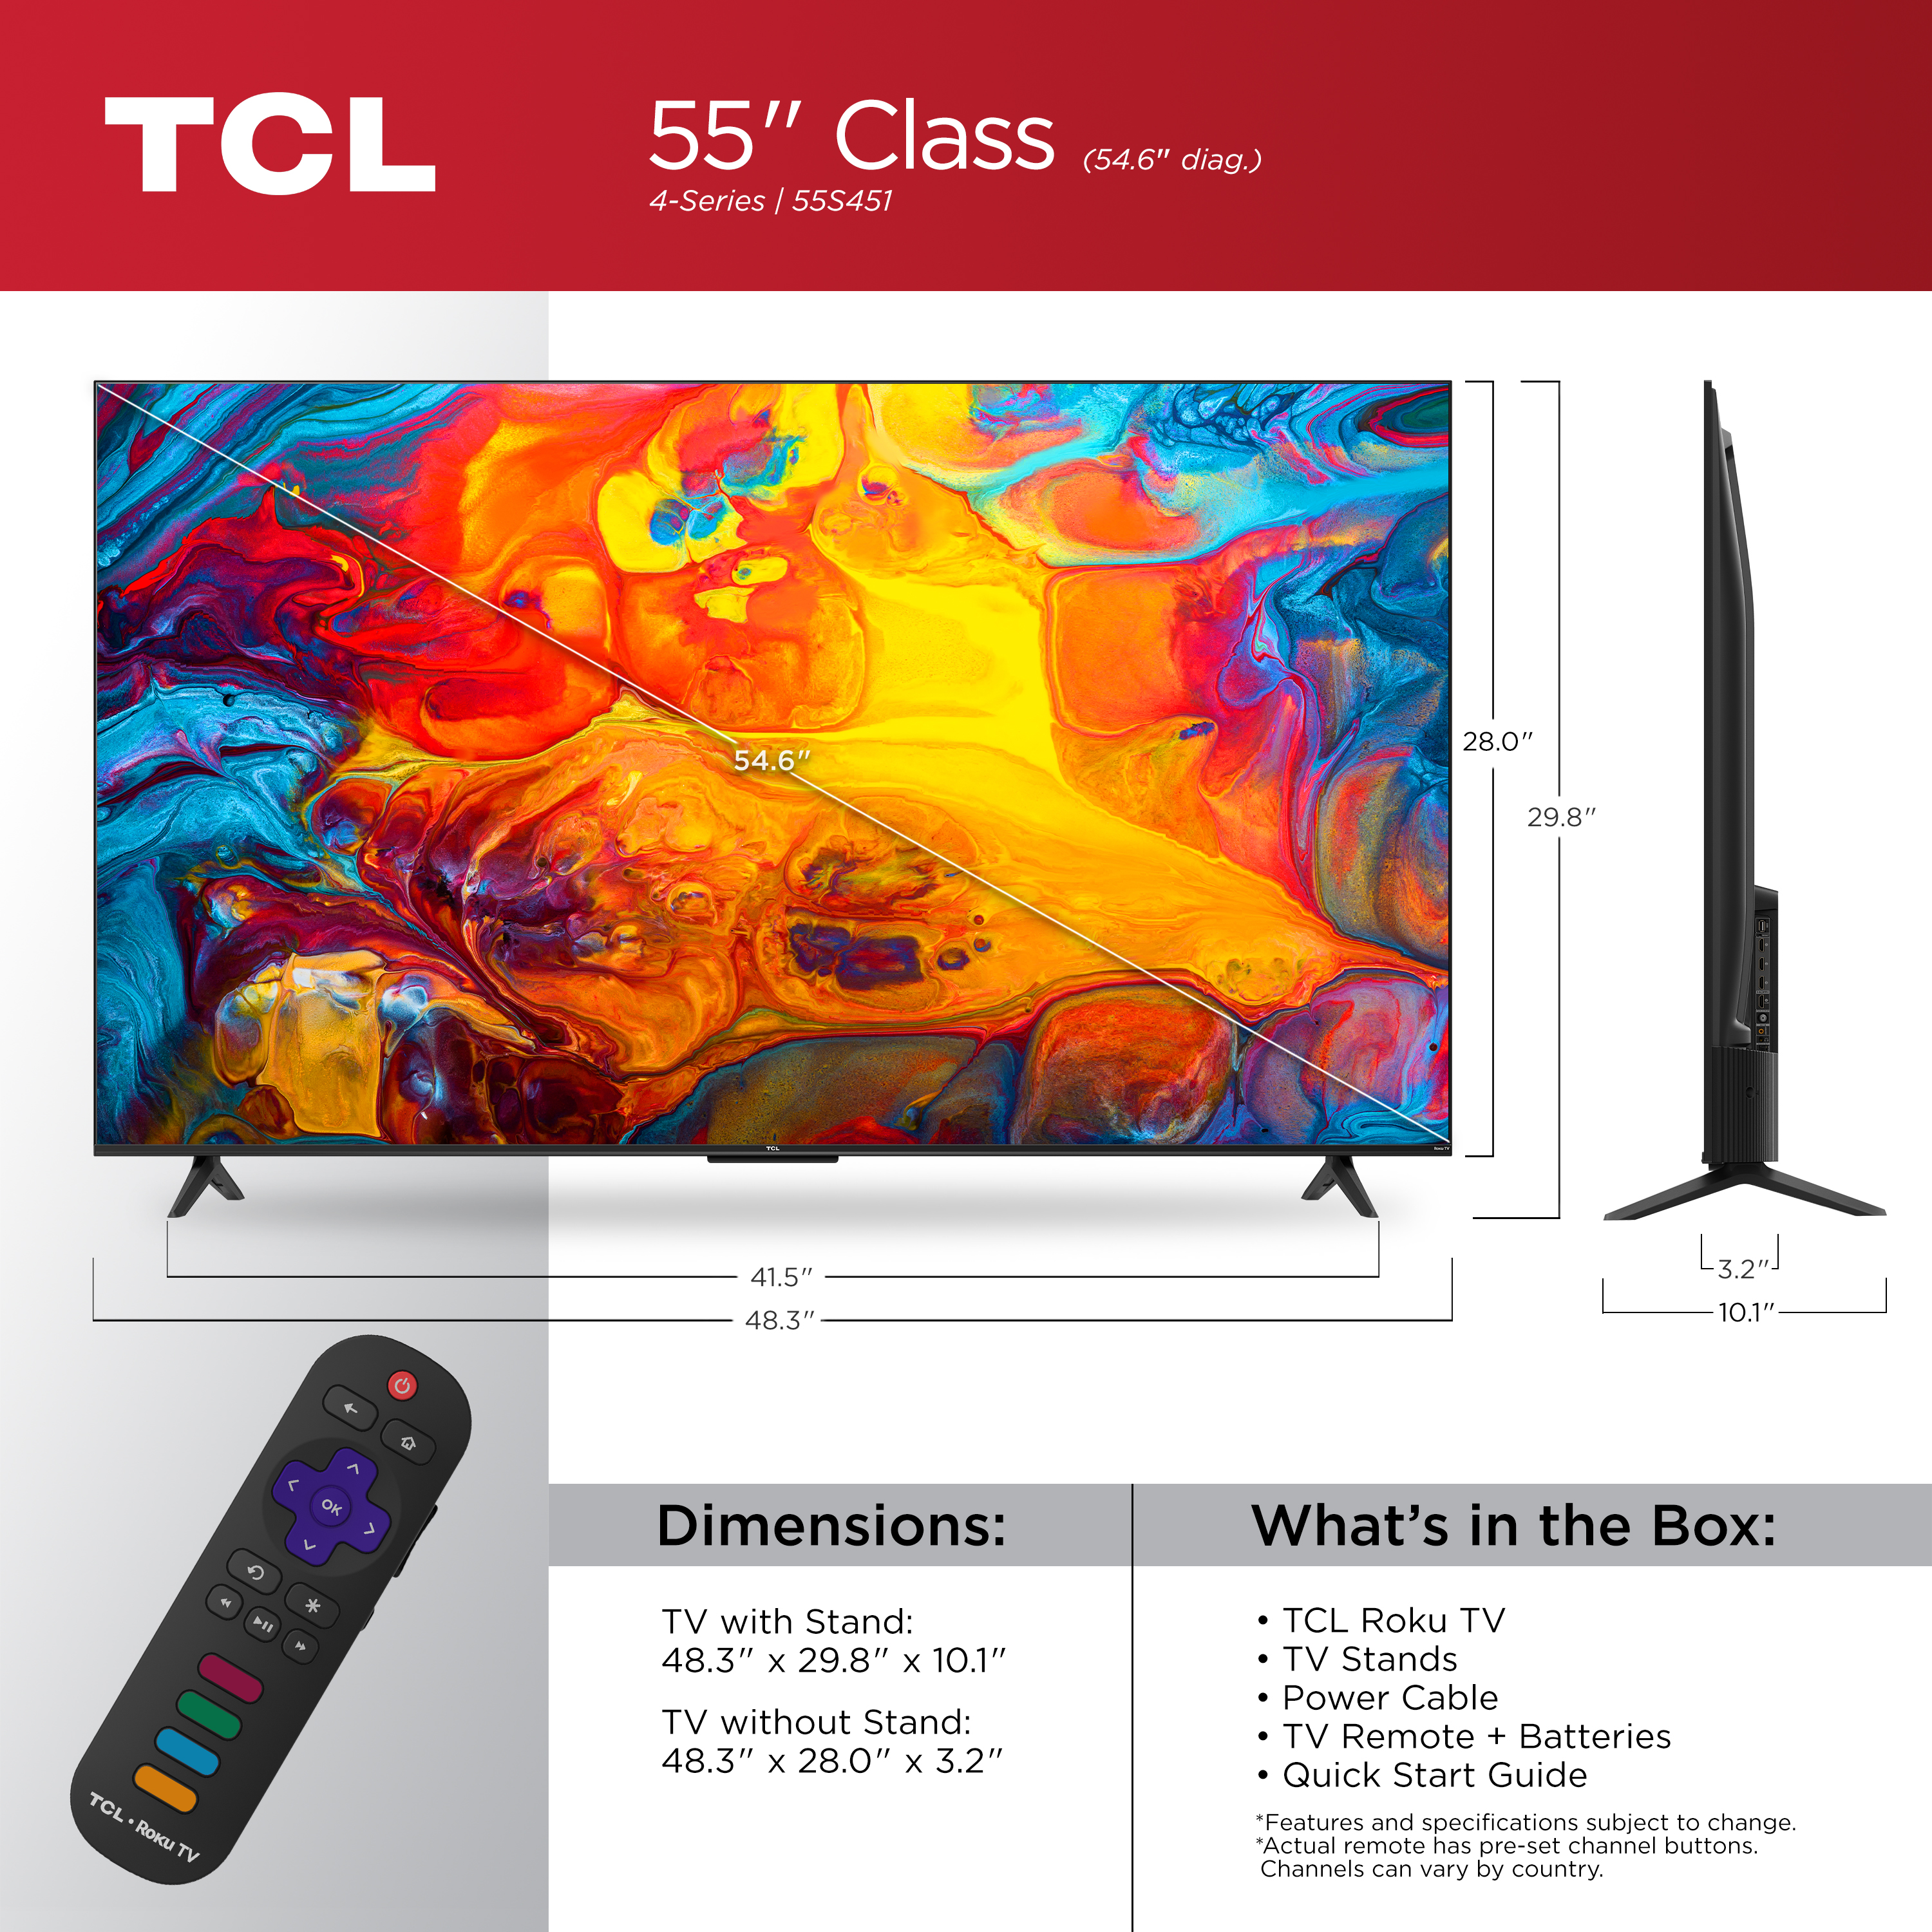 TCL 55" Class 4-Series 4K UHD HDR Smart Roku TV - 55S451 - image 5 of 21